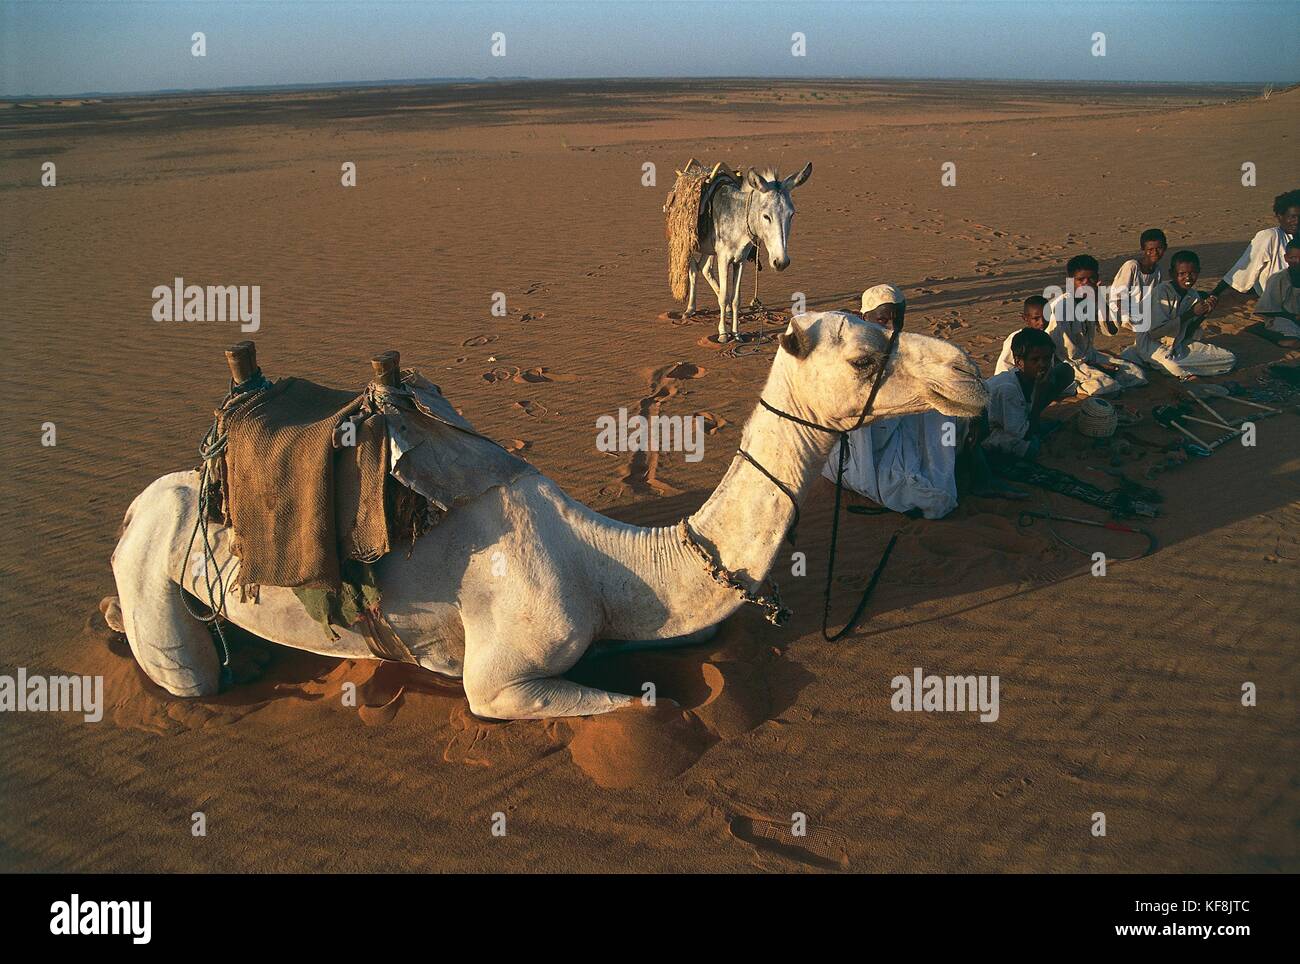 Sudan. Desert caravan at Meroe area Stock Photo